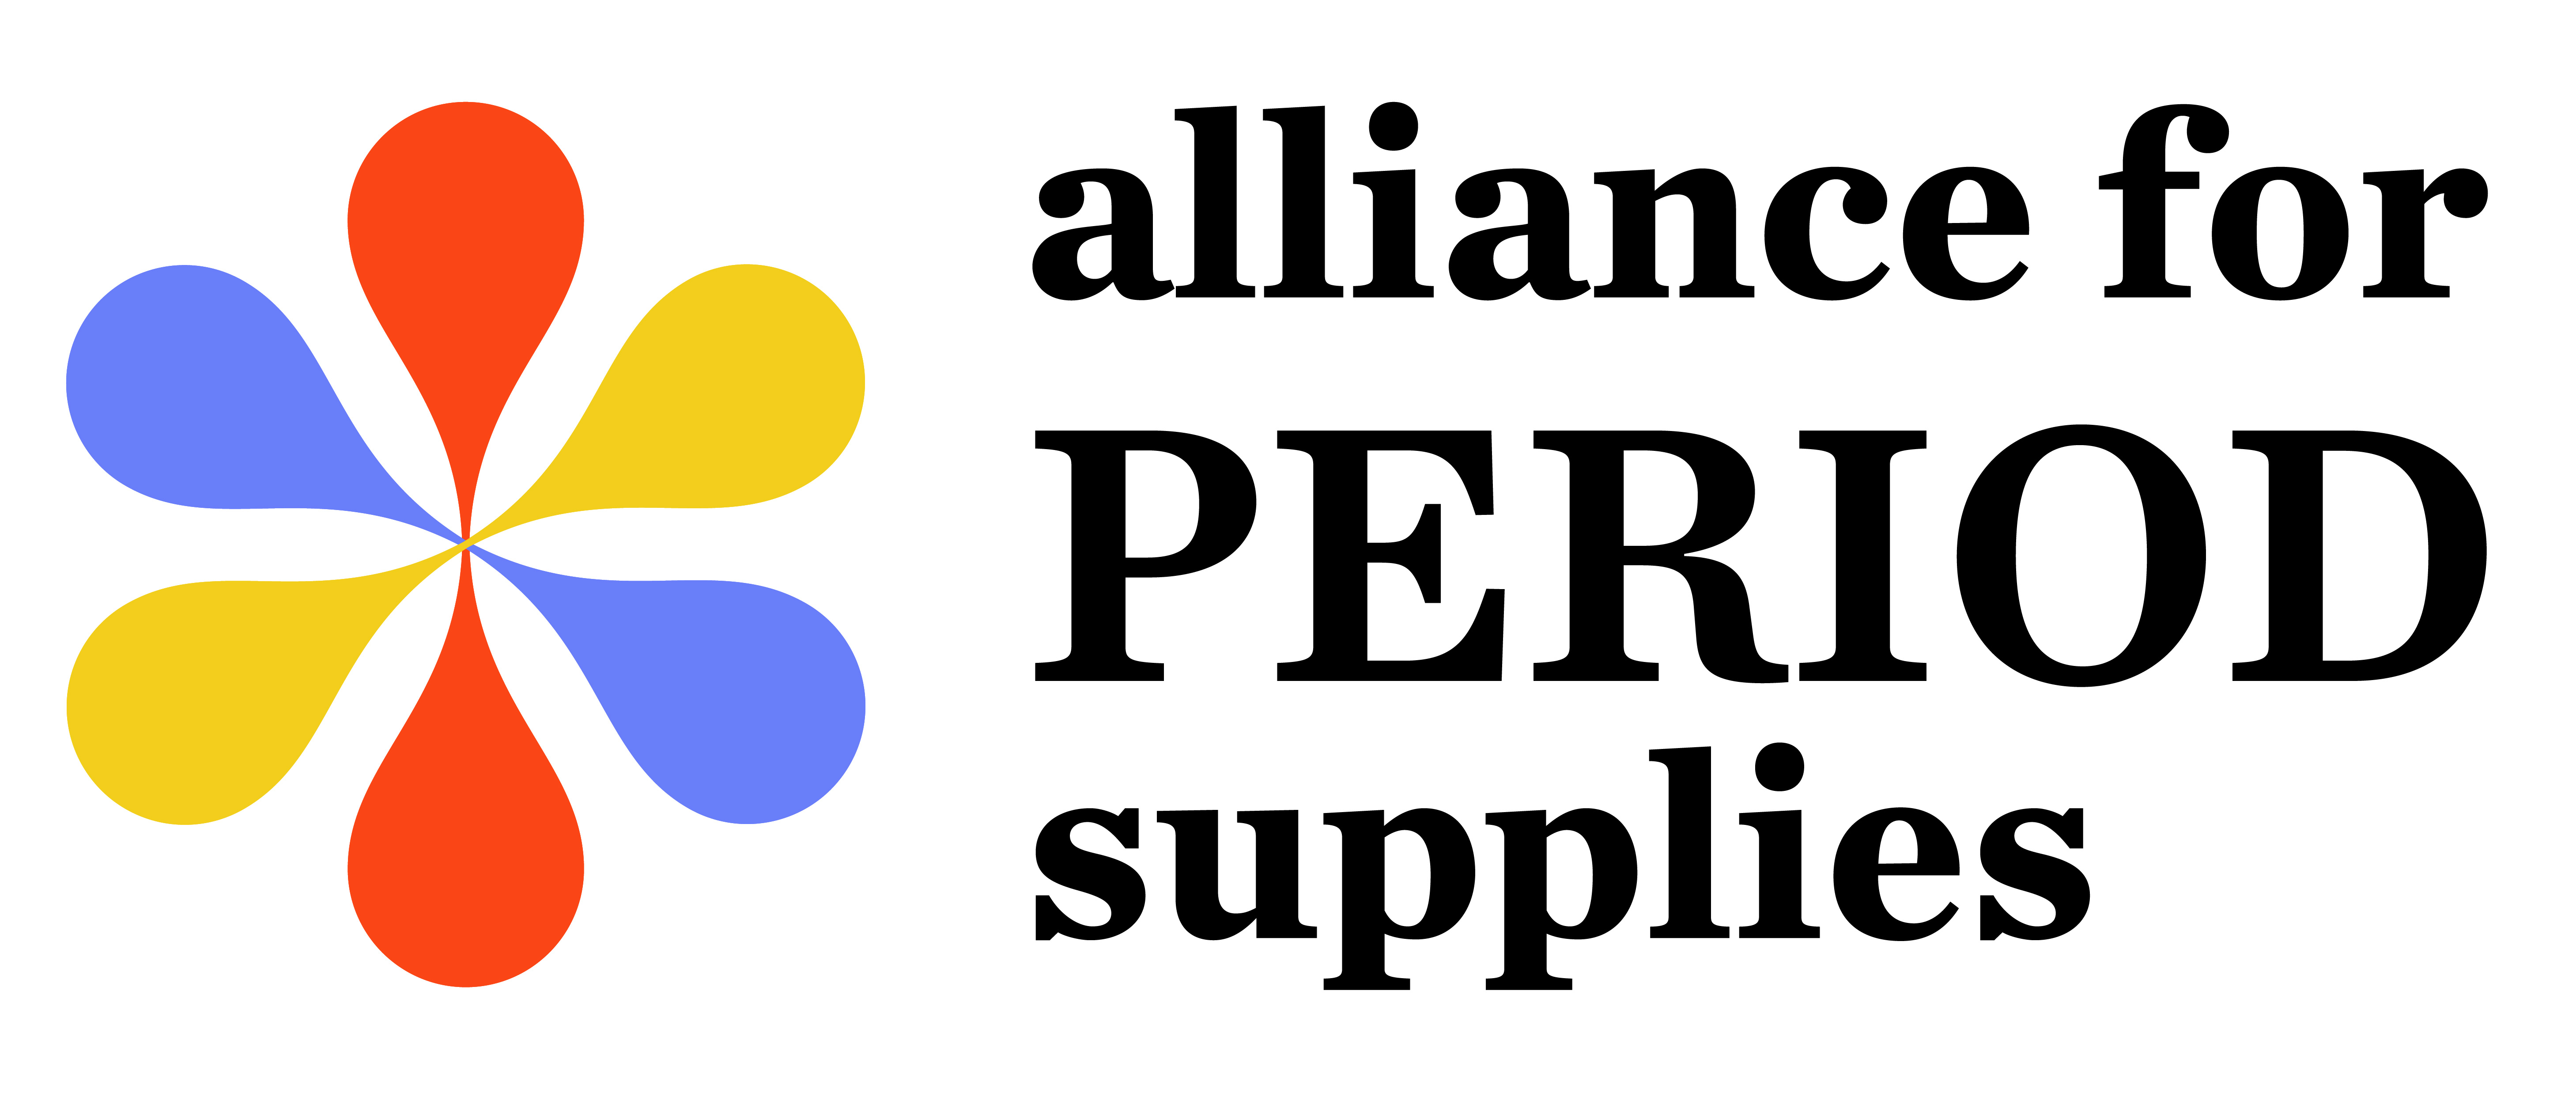 653-alliance-for-period-supplies-logo-jpg.jpg